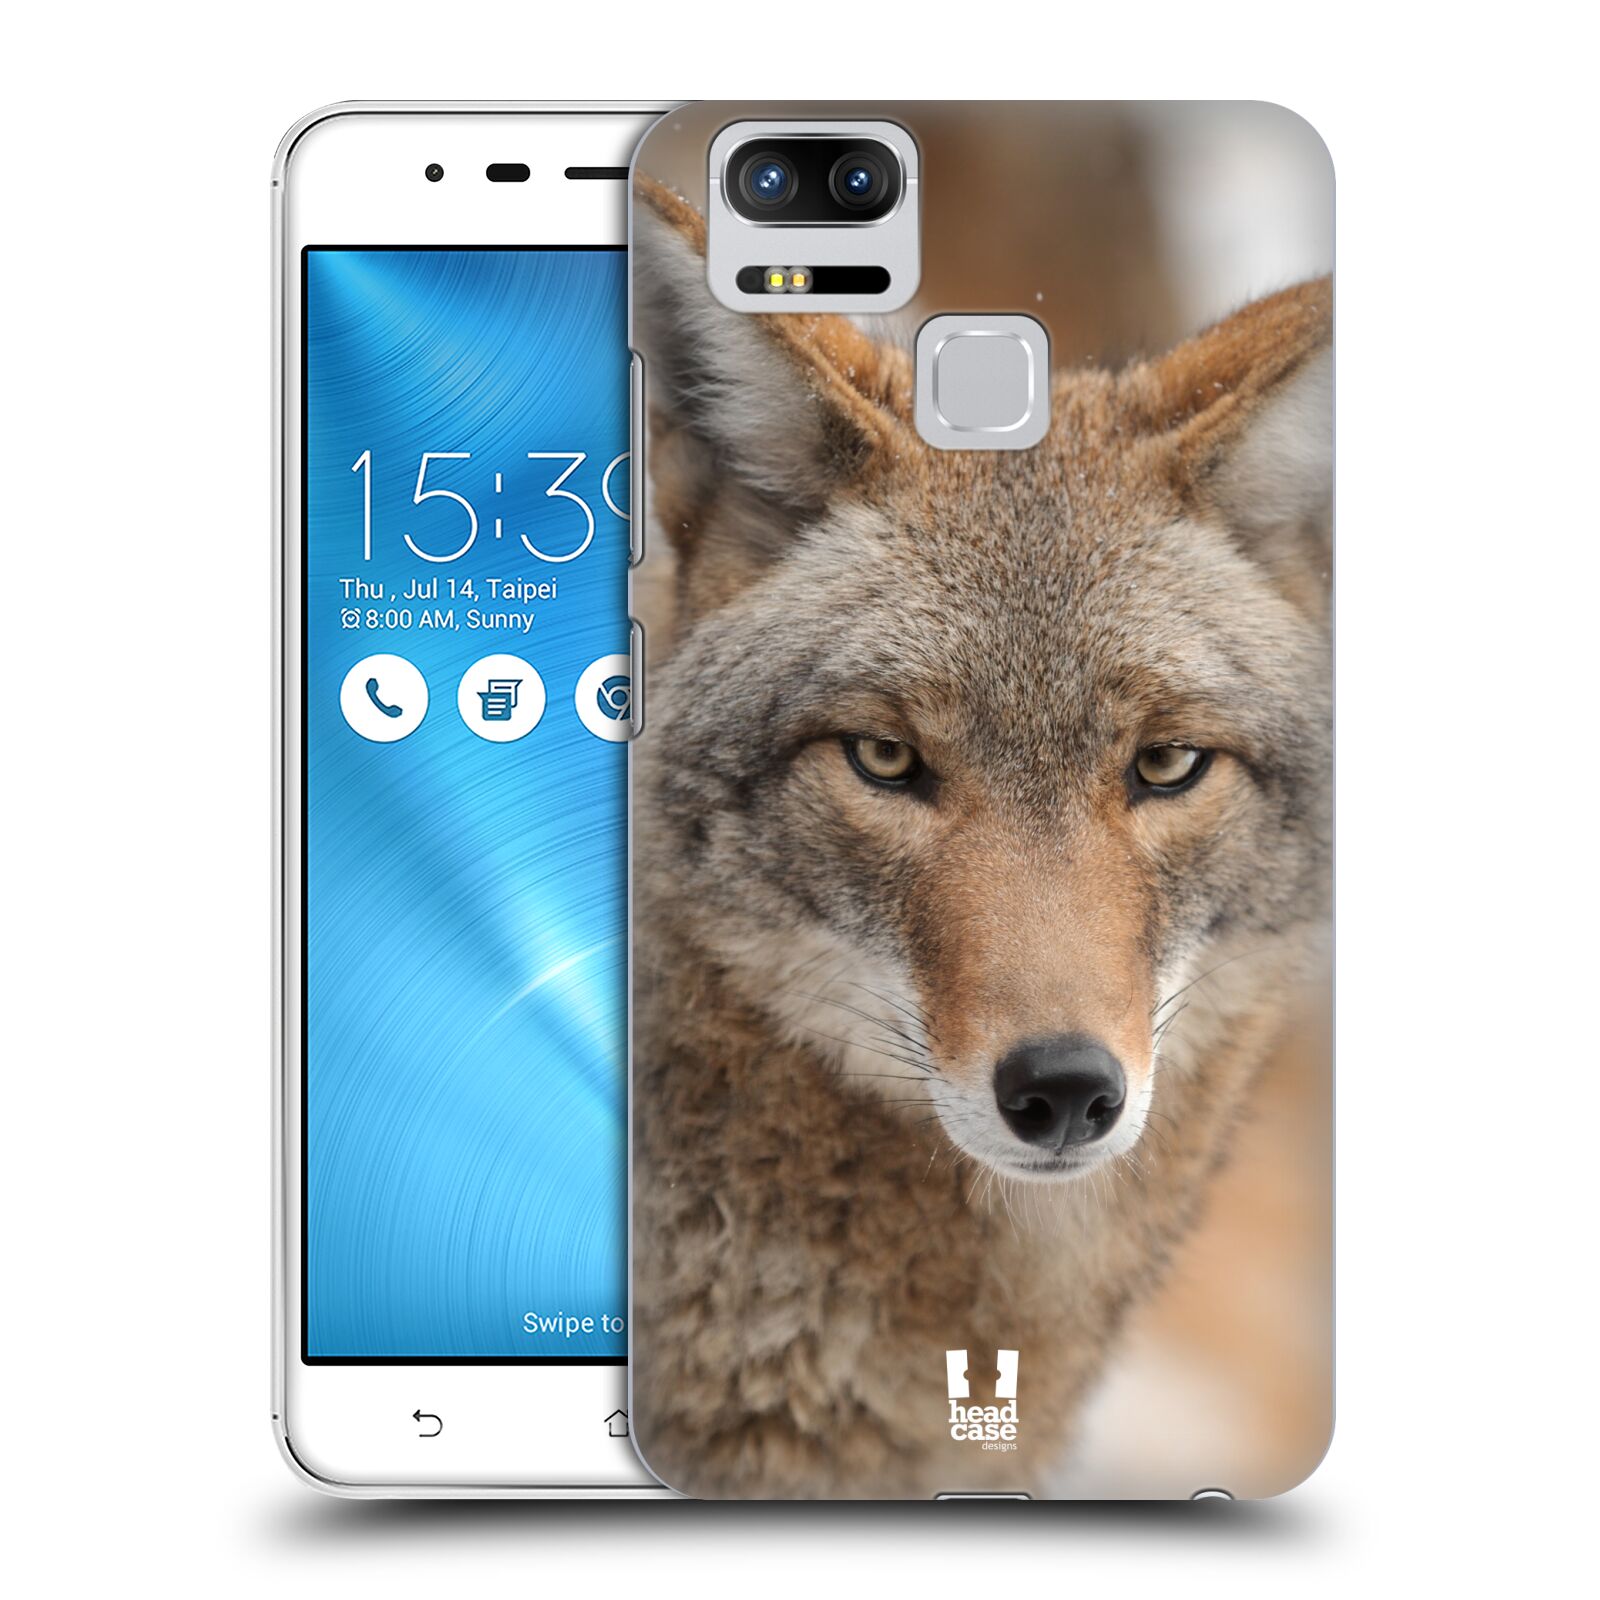 HEAD CASE plastový obal na mobil Asus Zenfone 3 Zoom ZE553KL vzor slavná zvířata foto kojot